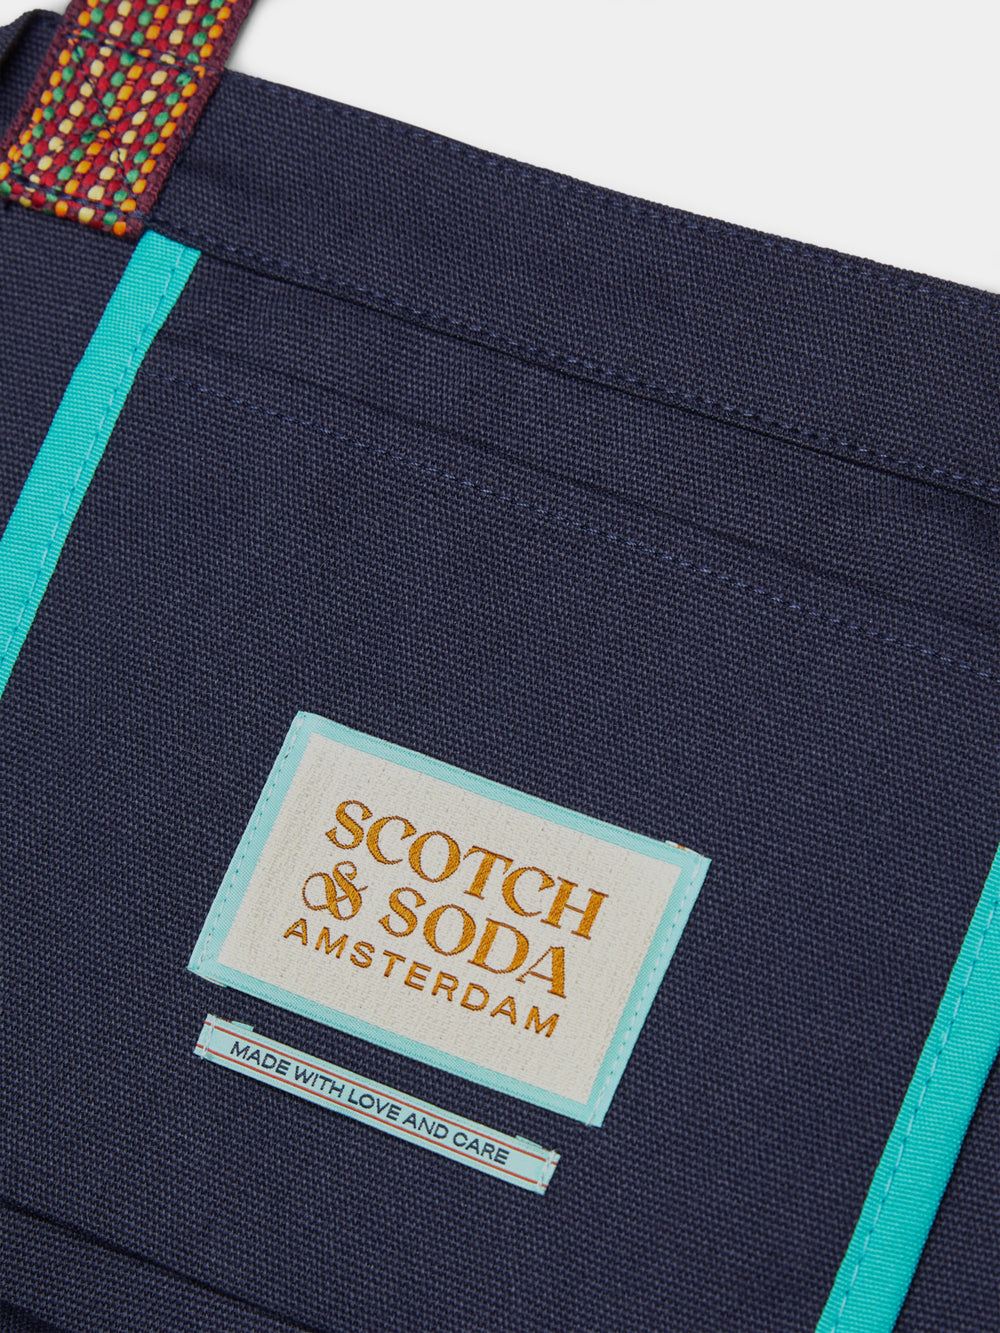 Canvas artwork tote bag - Scotch & Soda NZ